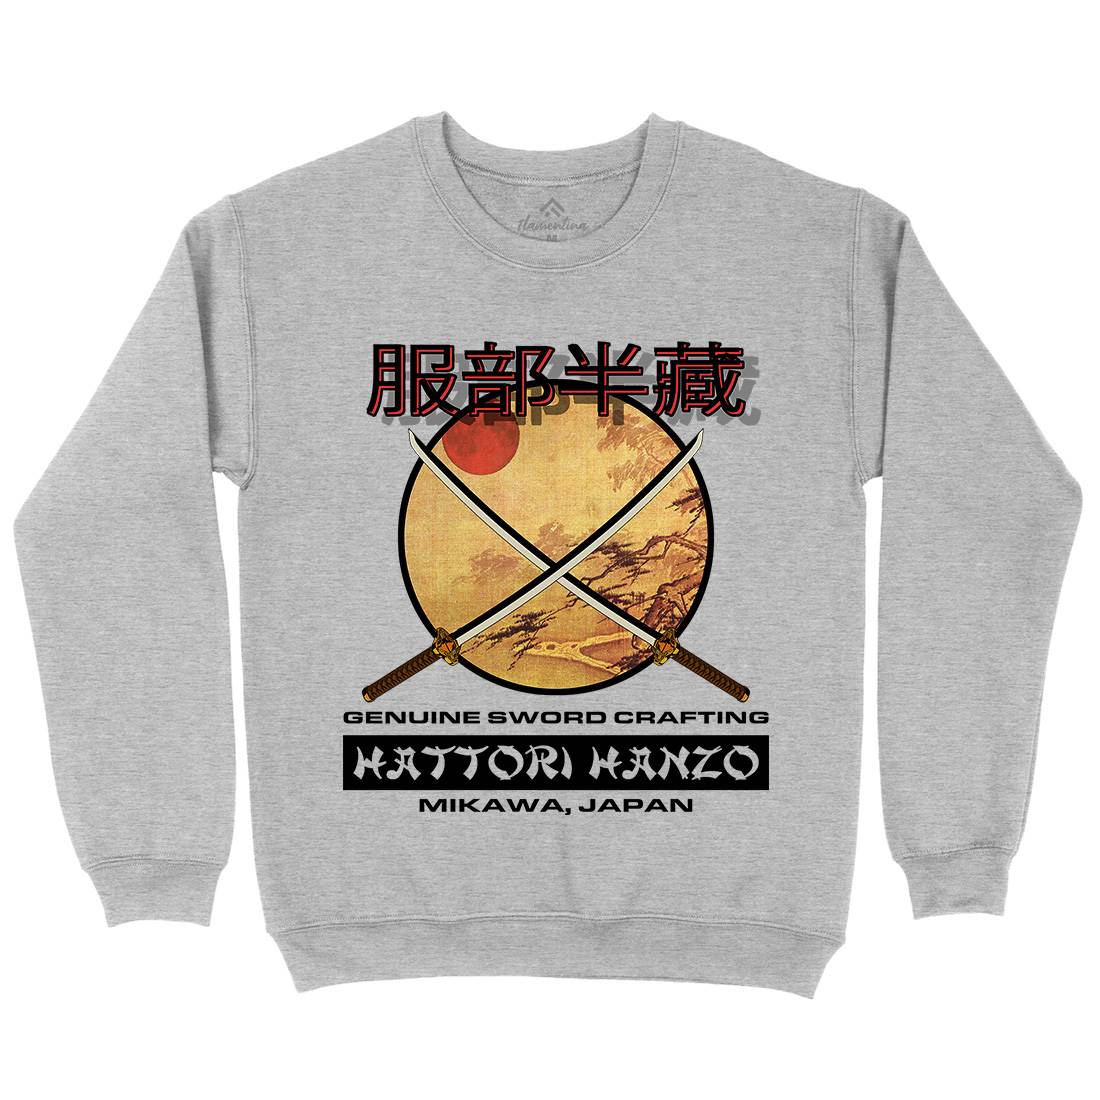 Hattori Hanzo Kids Crew Neck Sweatshirt Asian D419